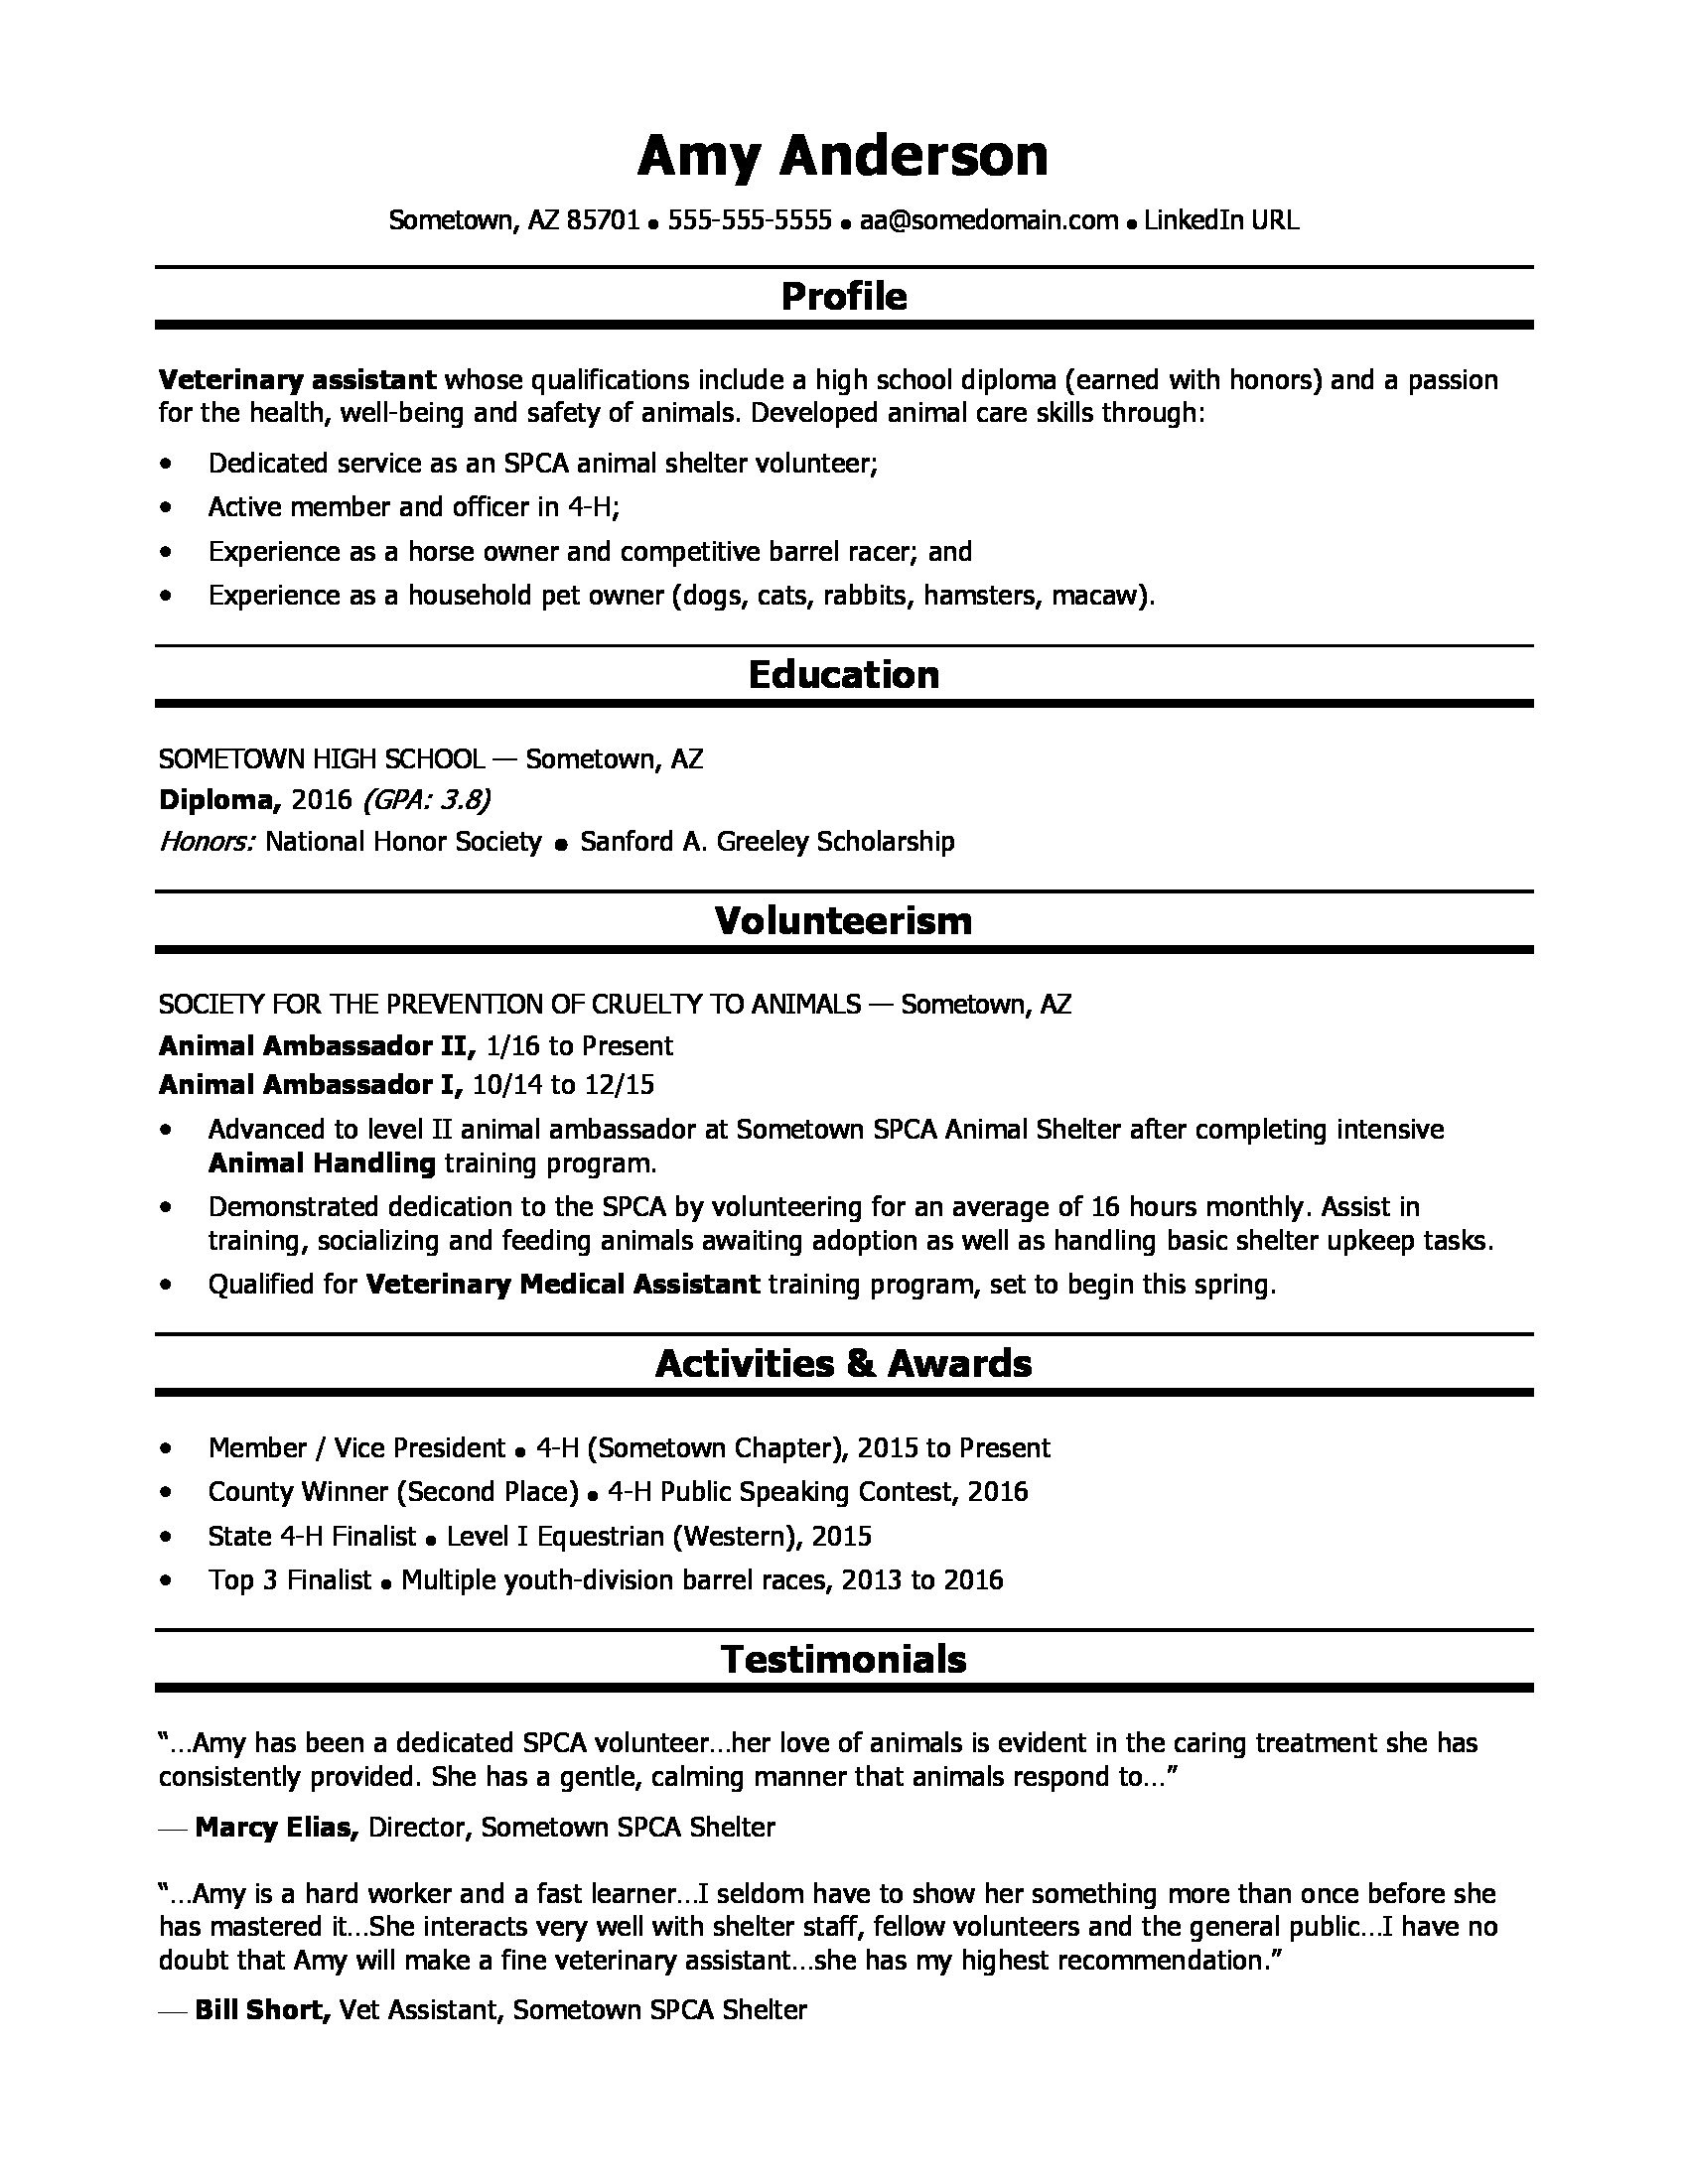 Sample Resume for Second Job Out Of College High School Grad Resume Sample Monster.com